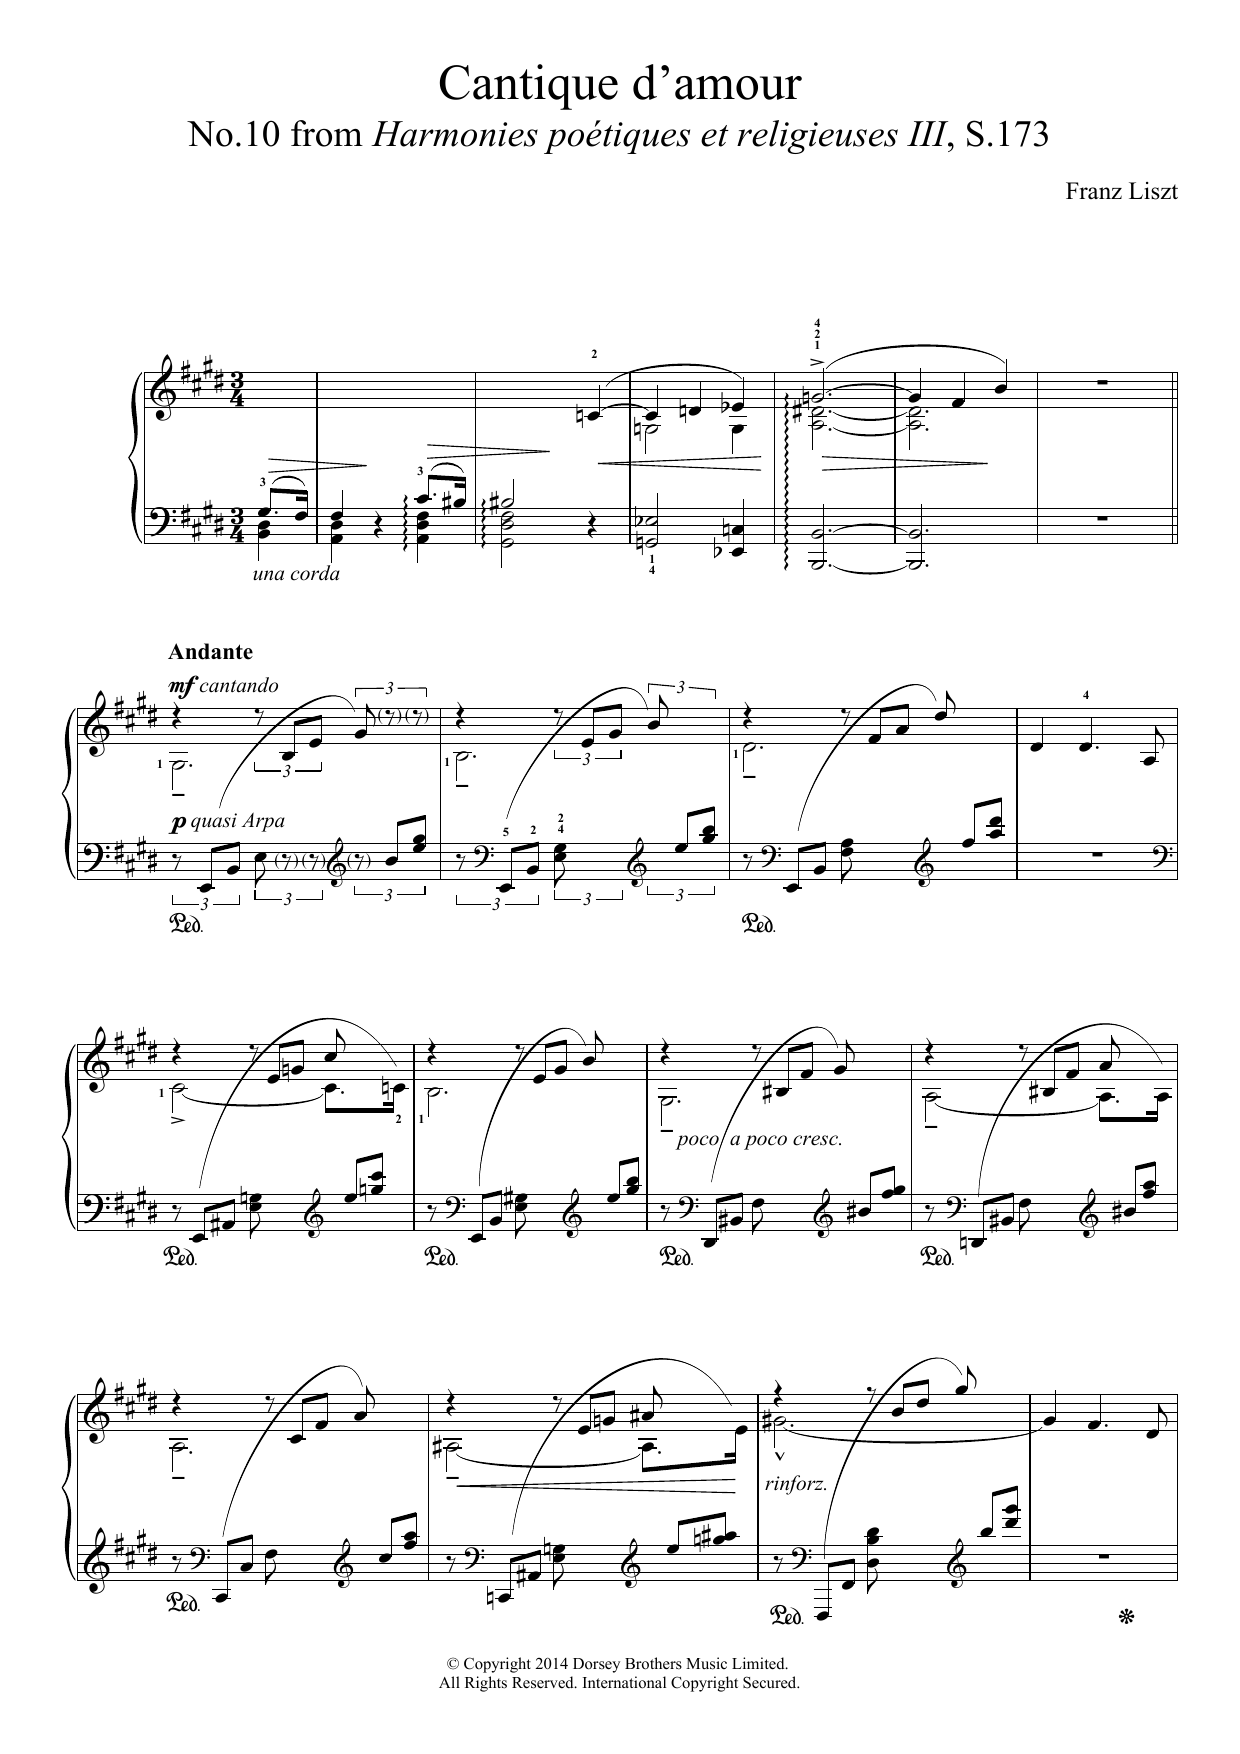 Franz Liszt Harmonies Poétiques Et Réligieuses For Piano No.10: Cantique D'amour Sheet Music Notes & Chords for Piano - Download or Print PDF